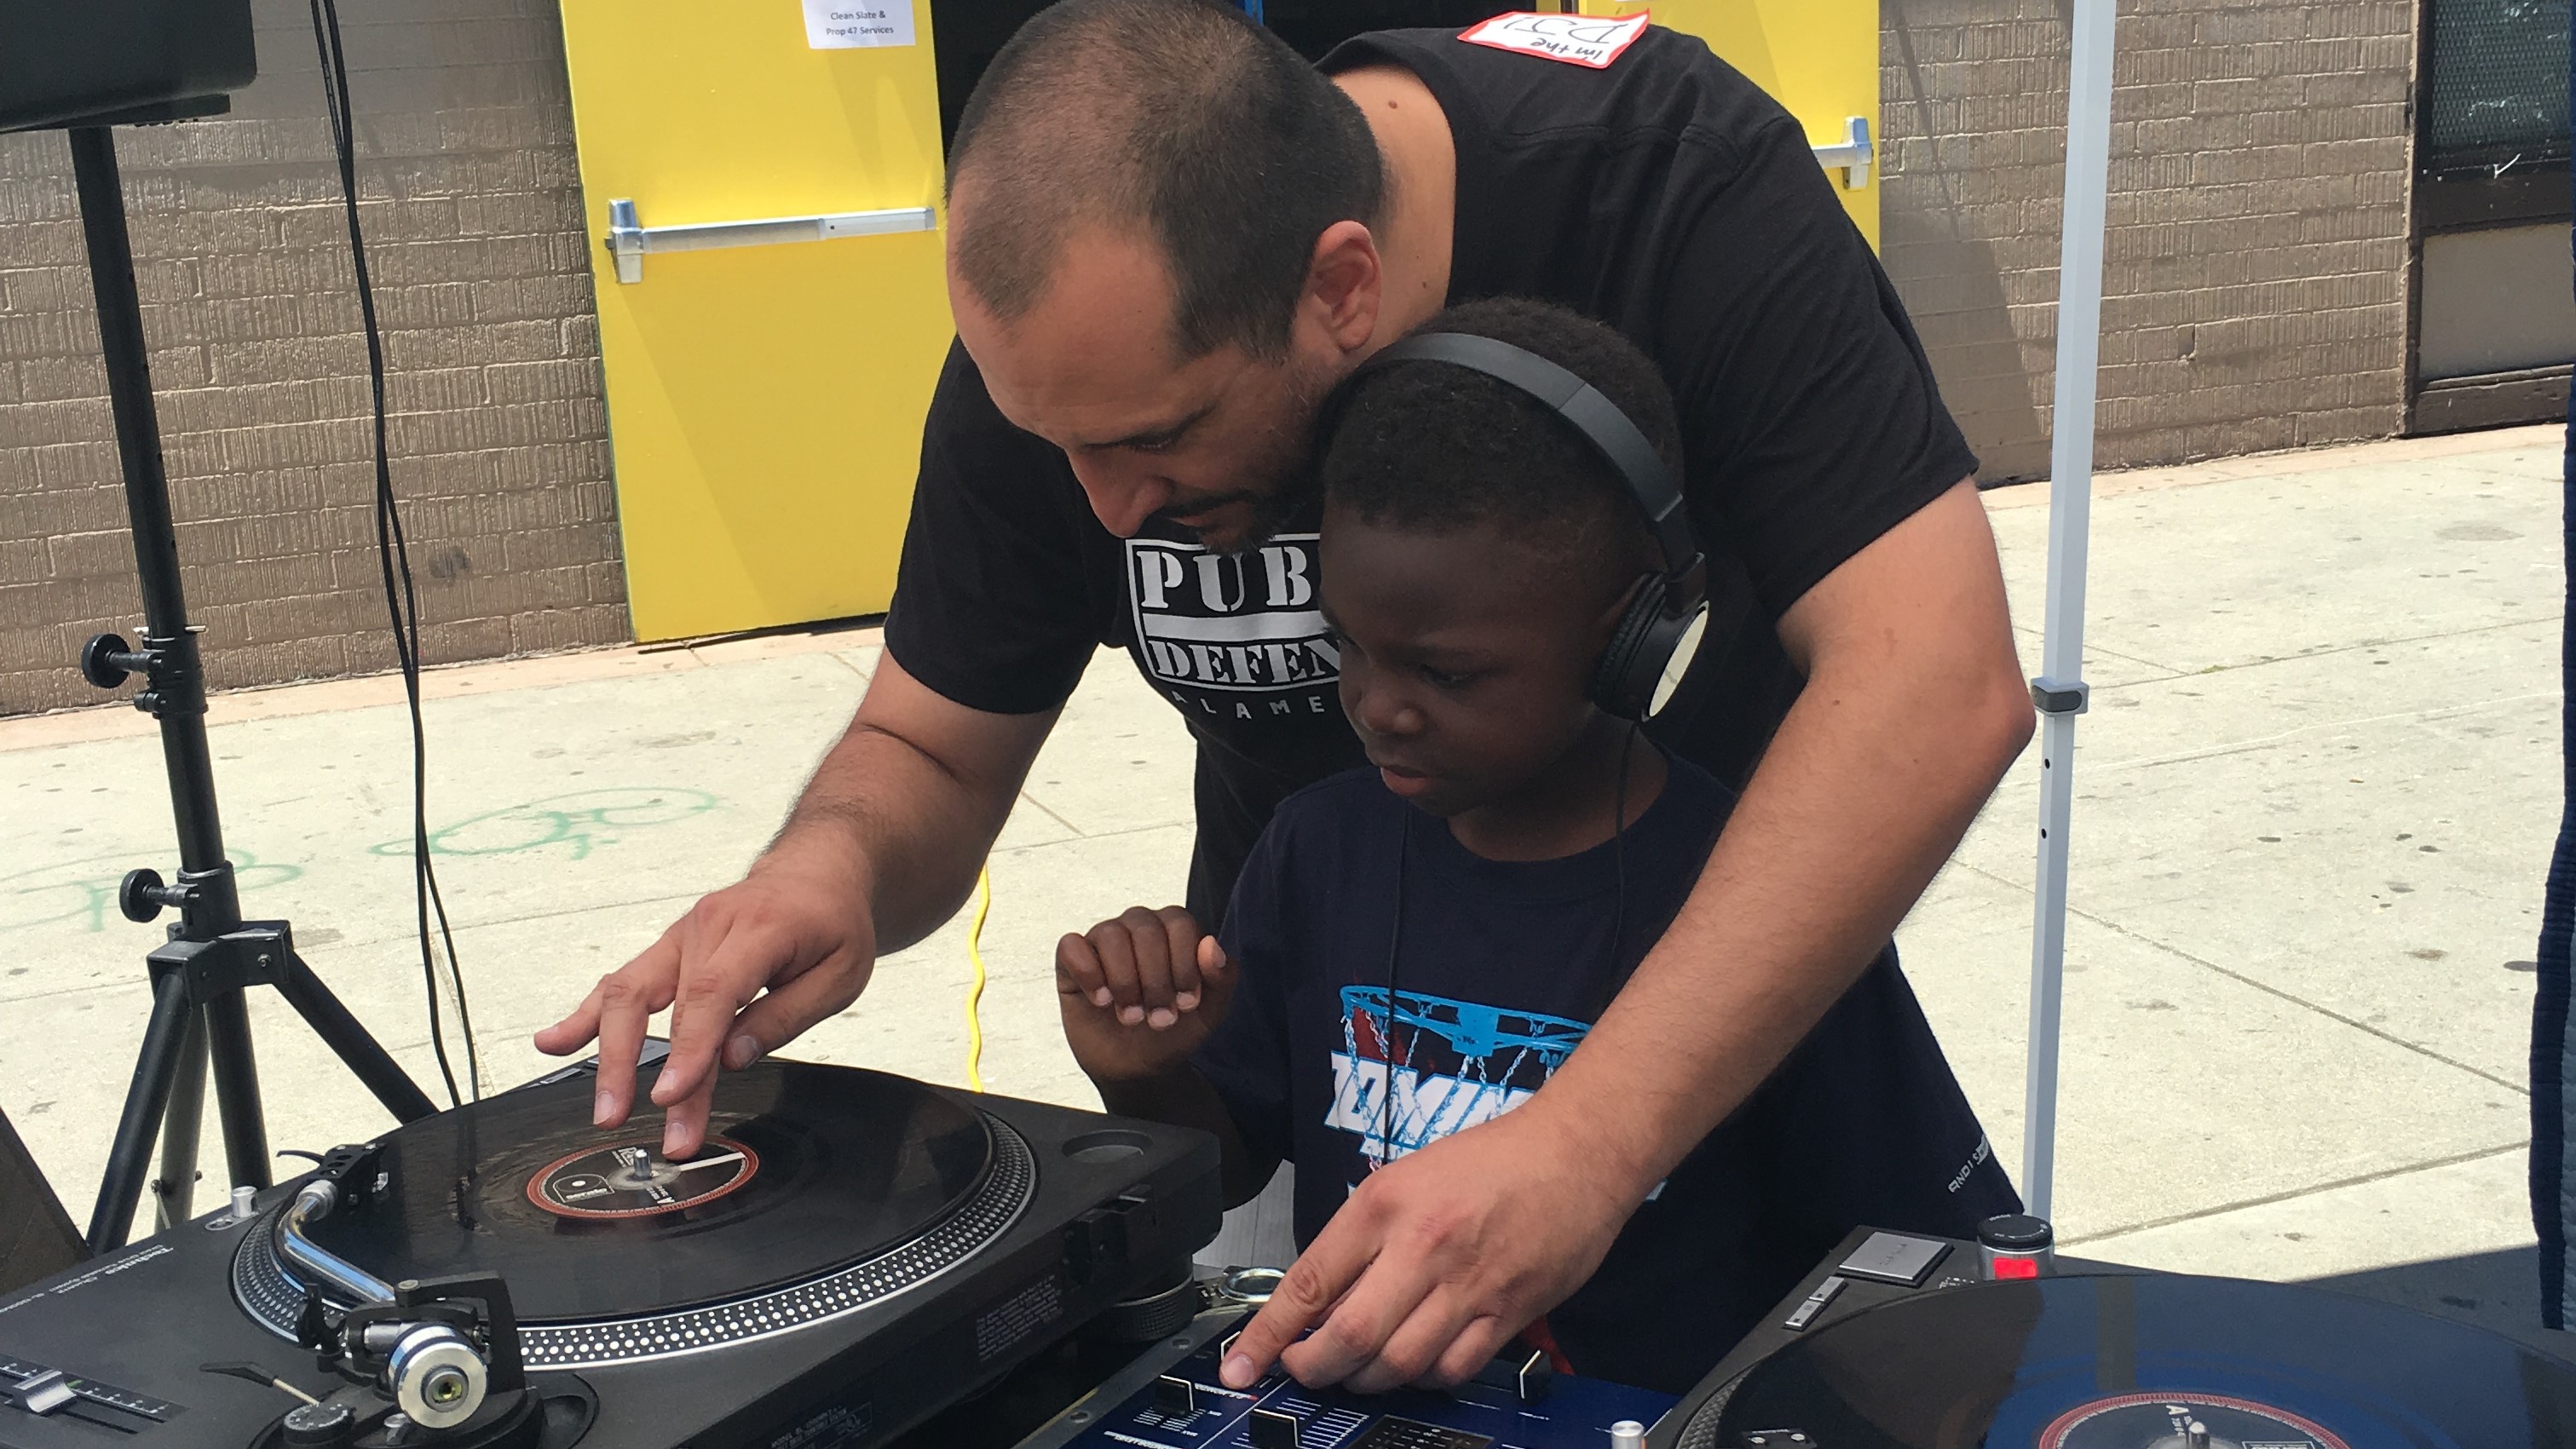 DJ Rack12 teaching little boy to DJ